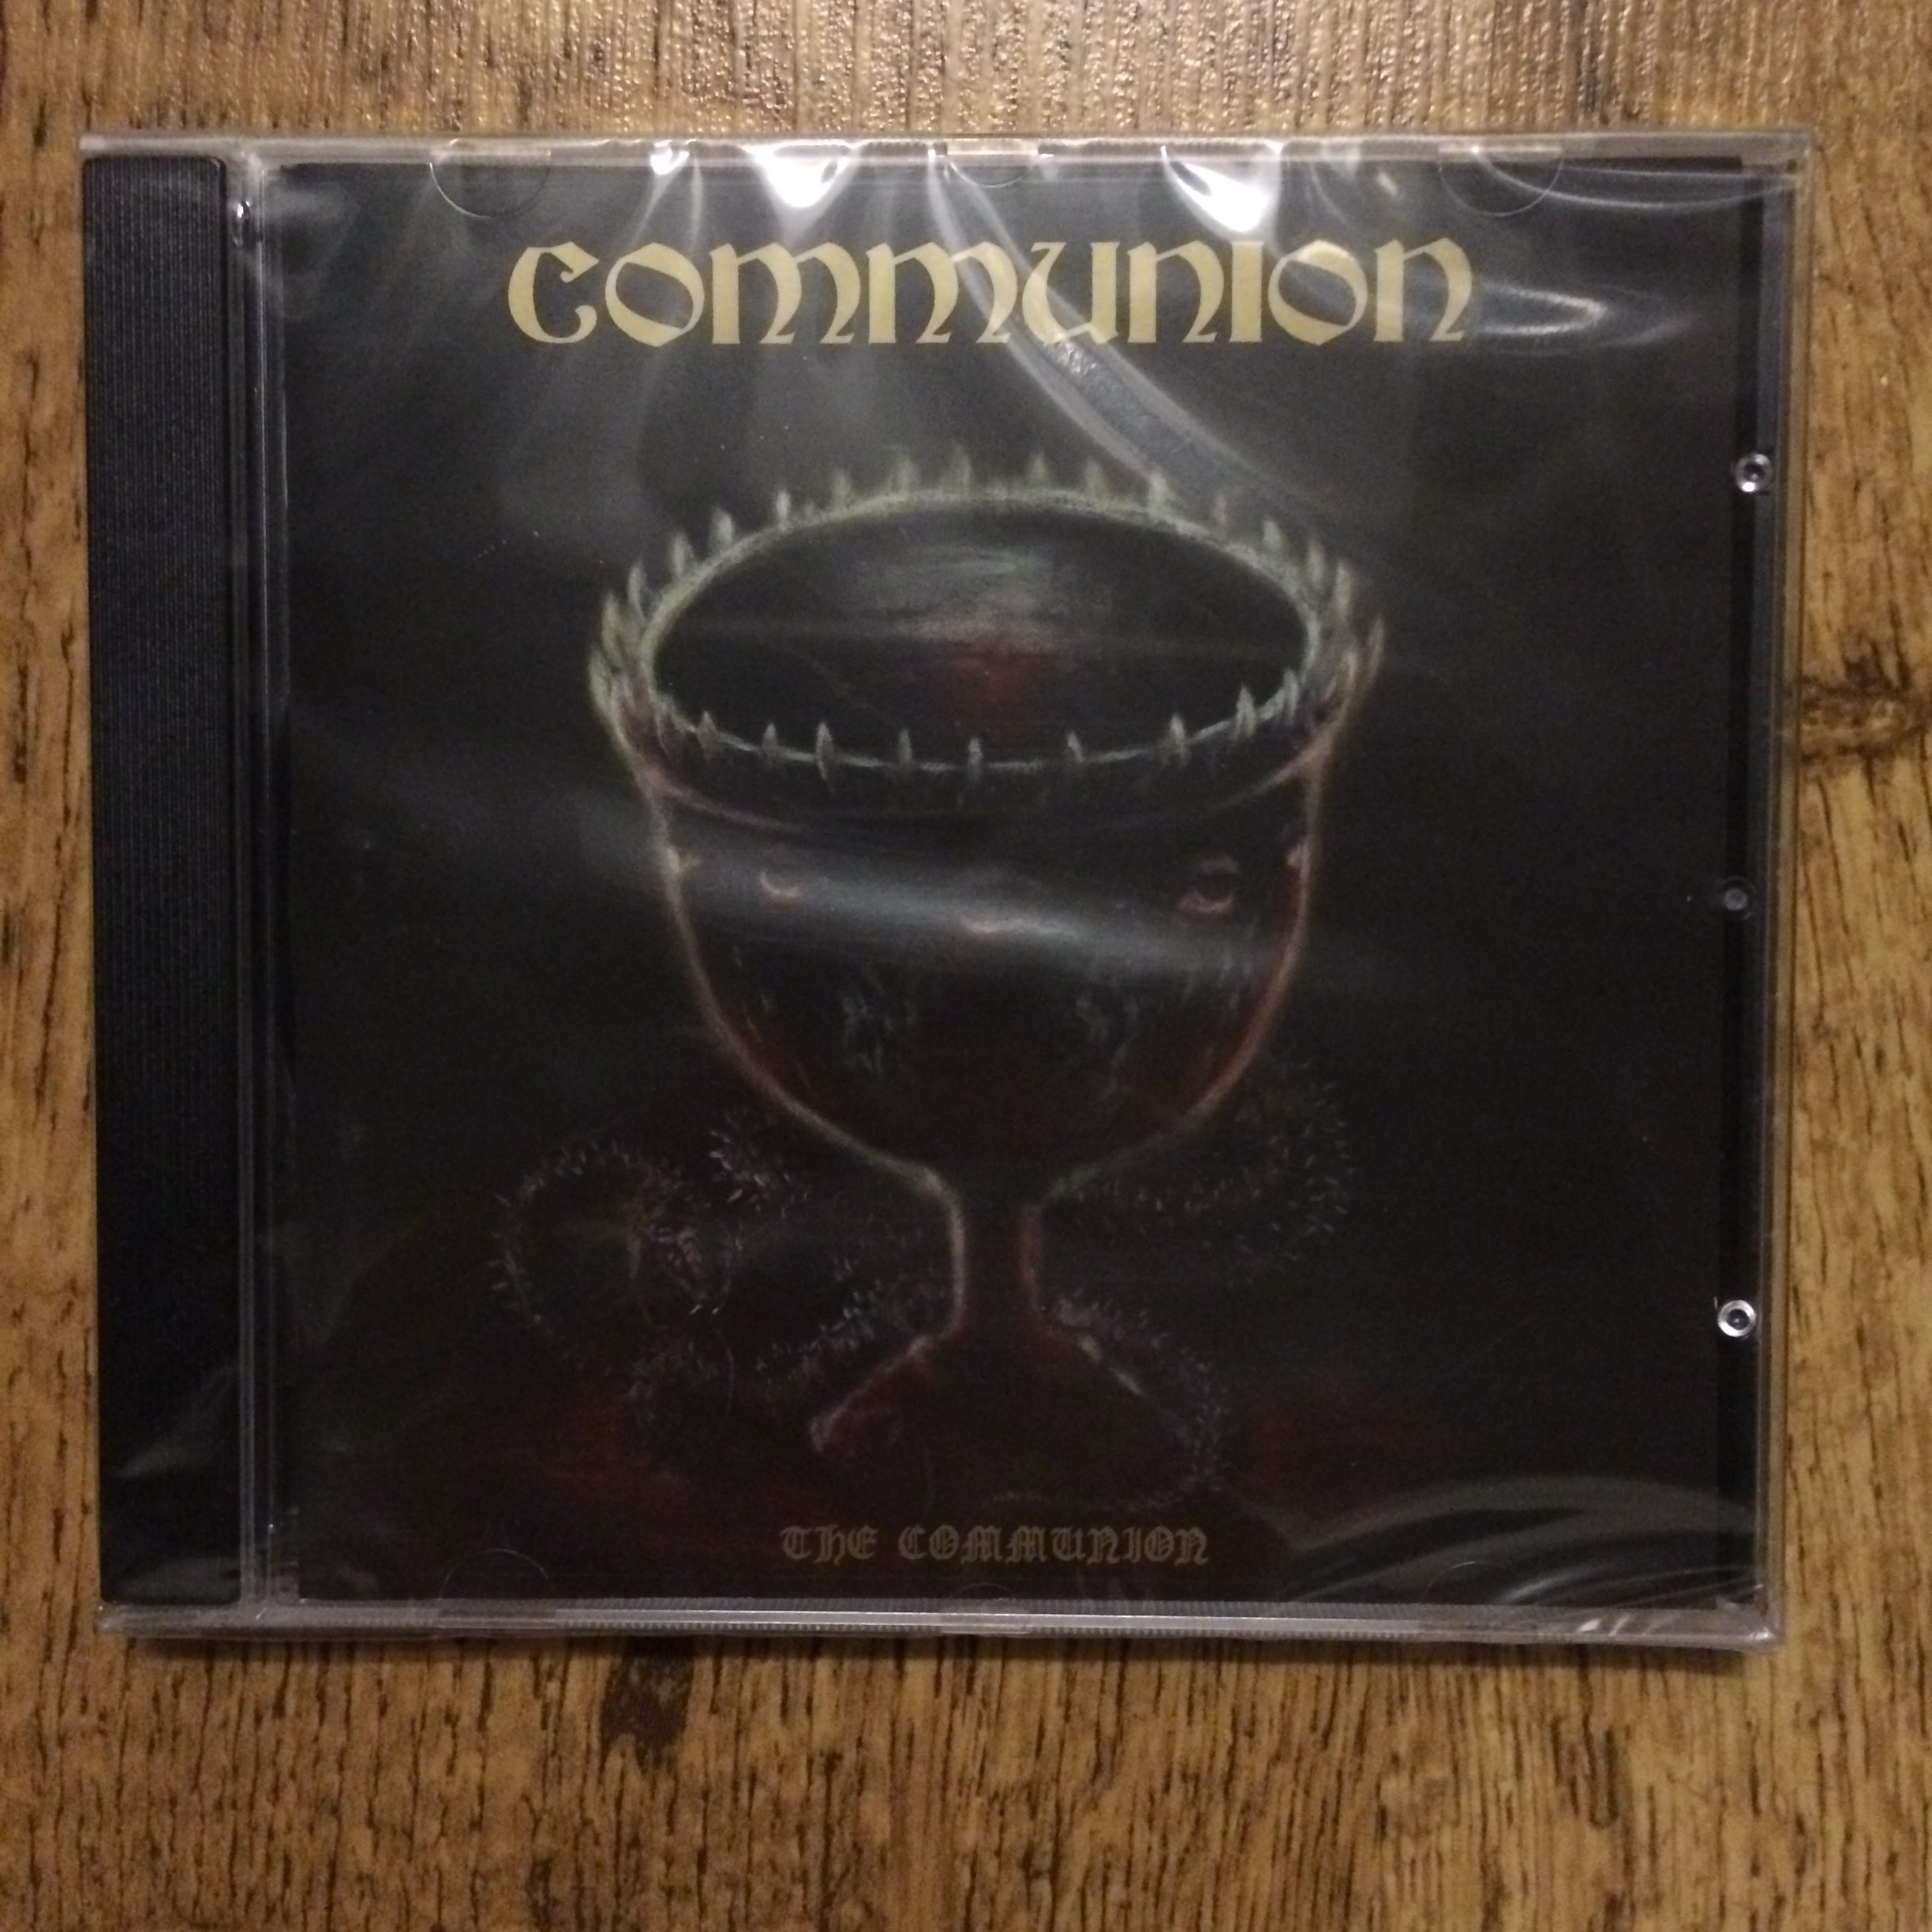 Photo of the Communion - 